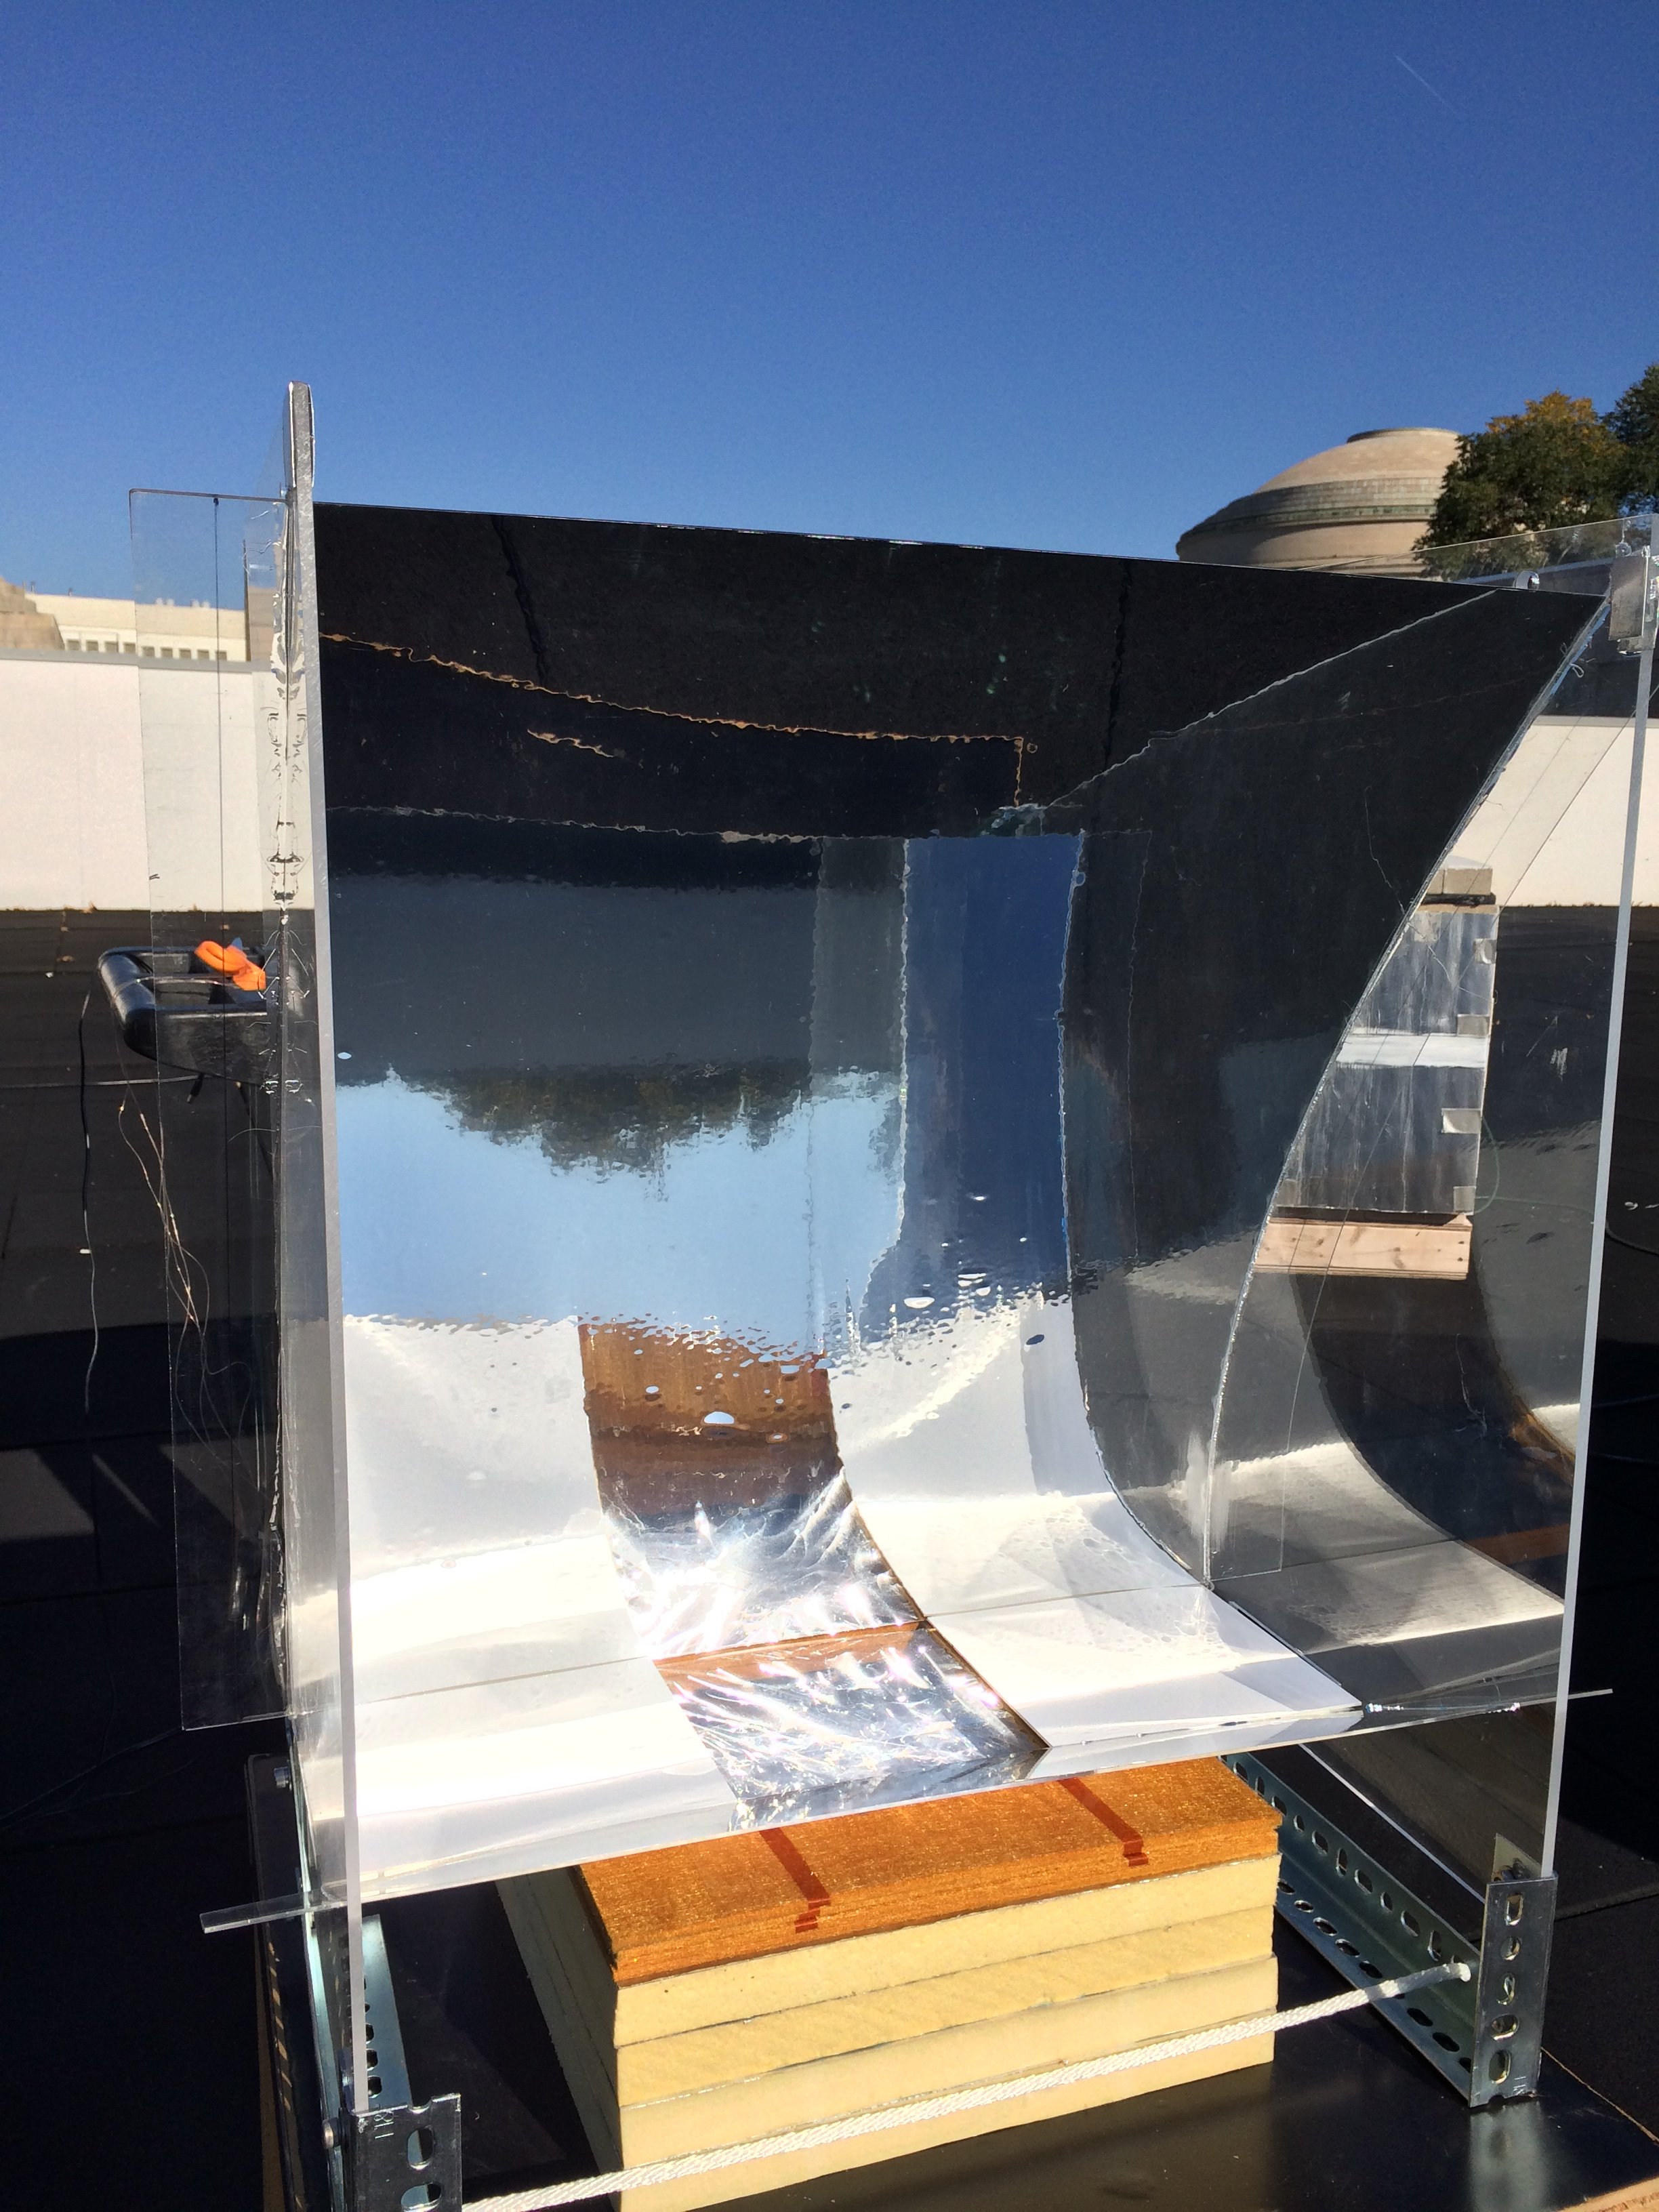 Sun-soaking device turns water into superheated steam, MIT News